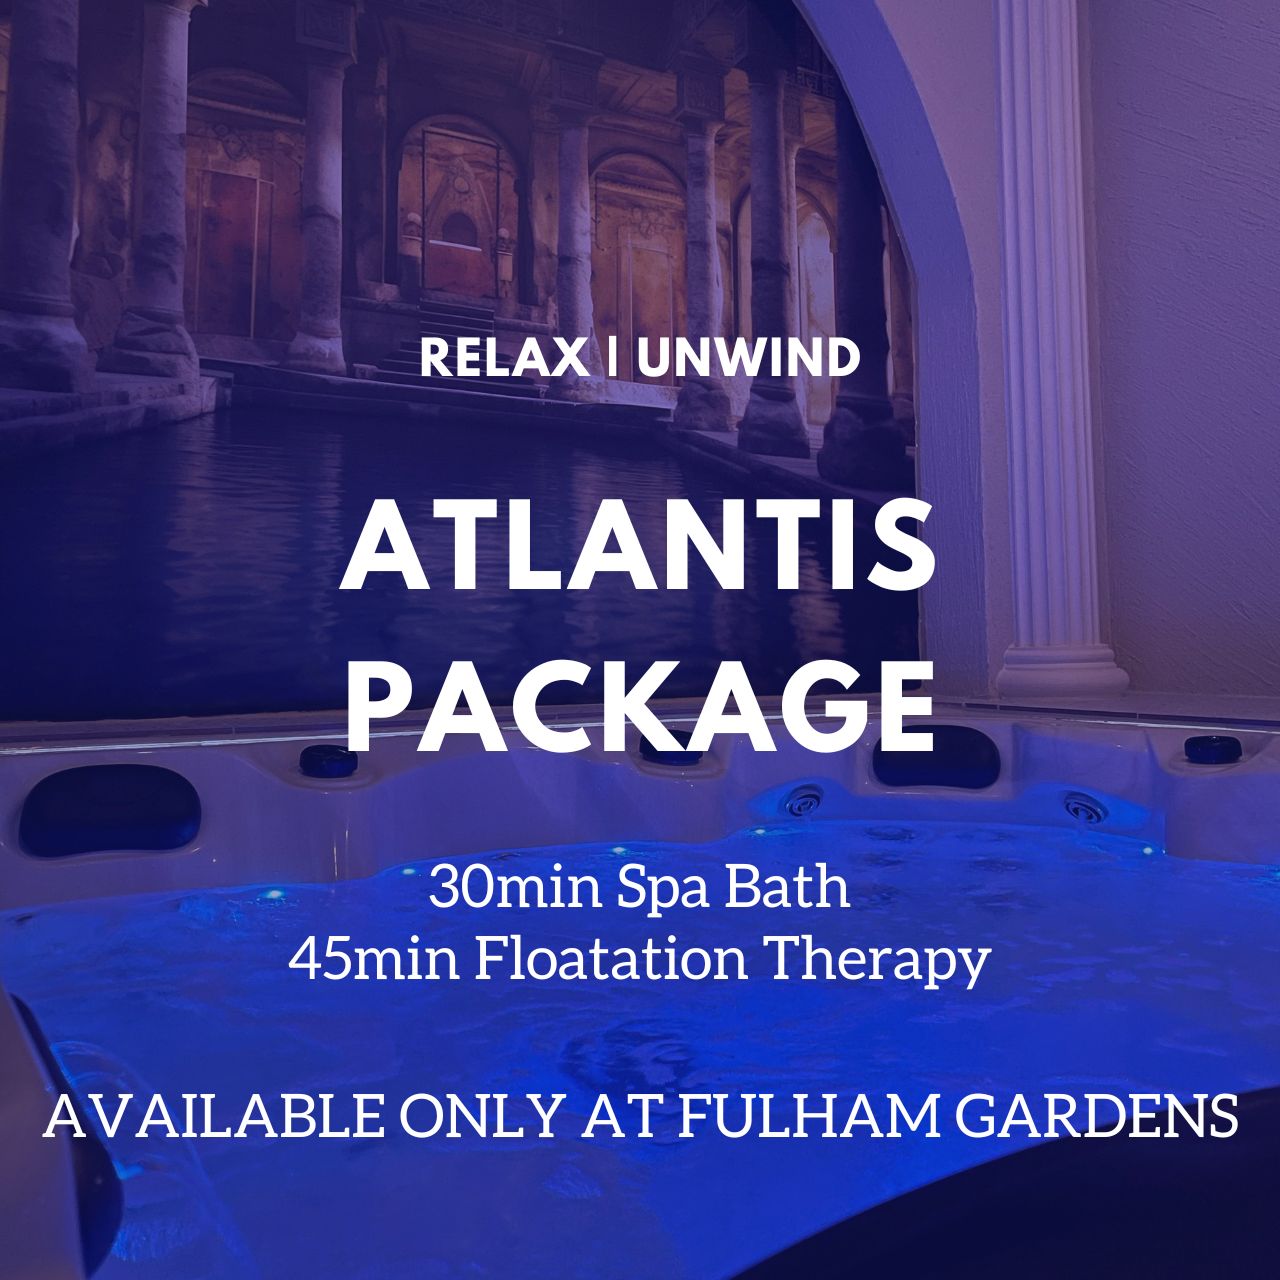 The Atlantis Package